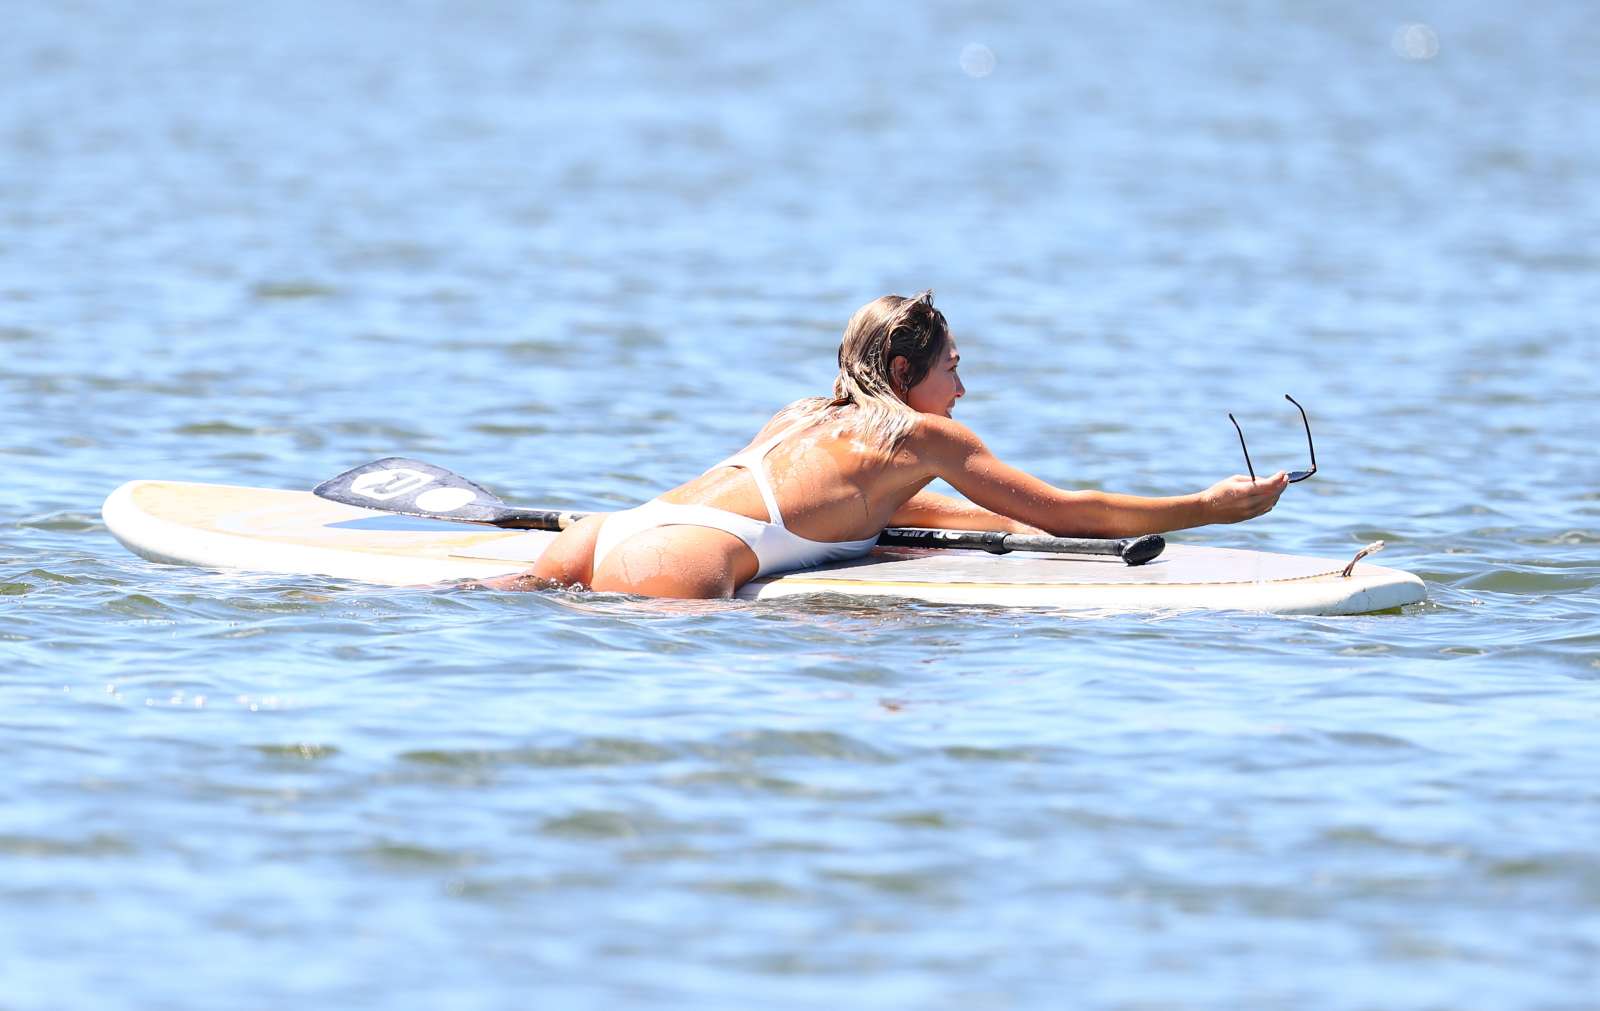 Ashley Hart in White Swimsuit Paddleboarding in New York. 